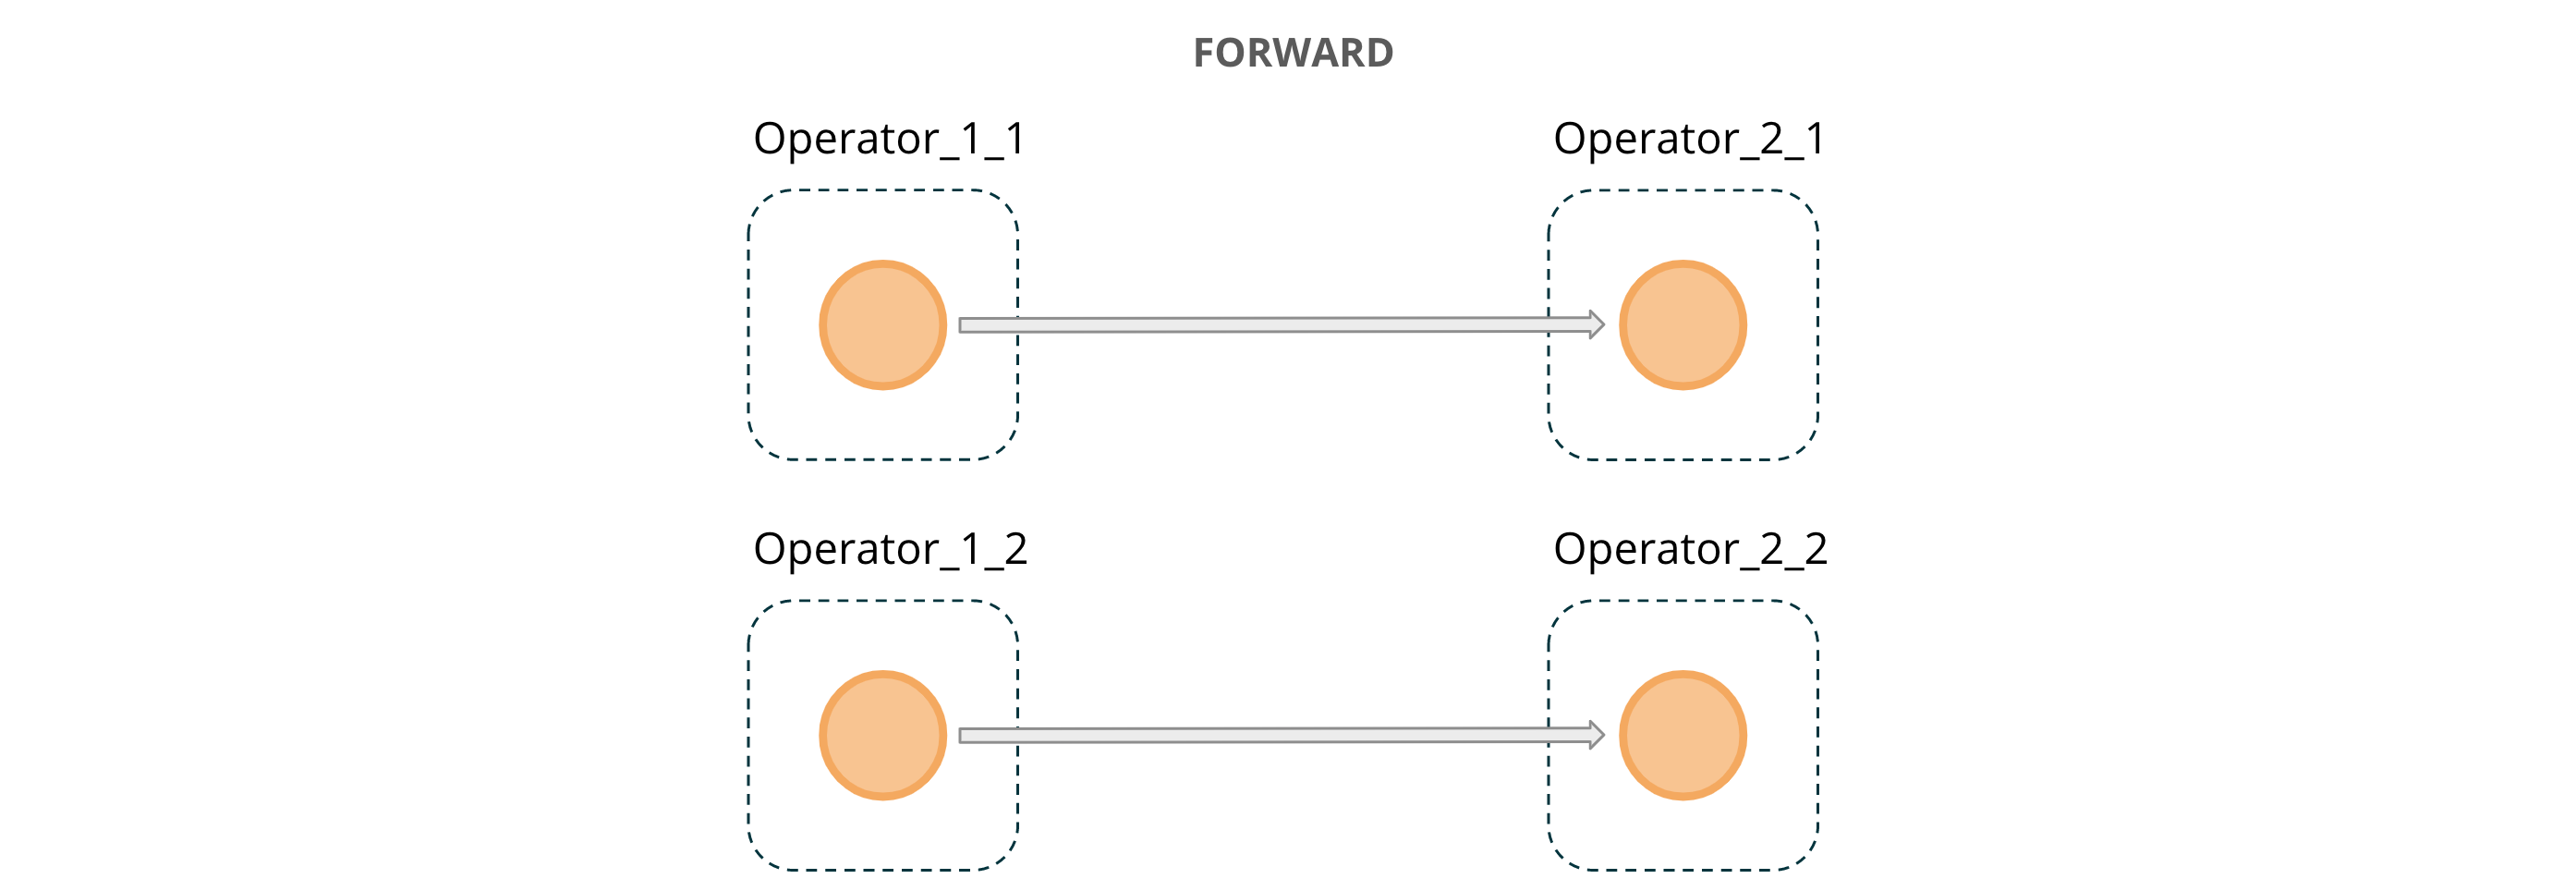 Figure 3: FORWARD message passing across operator instances